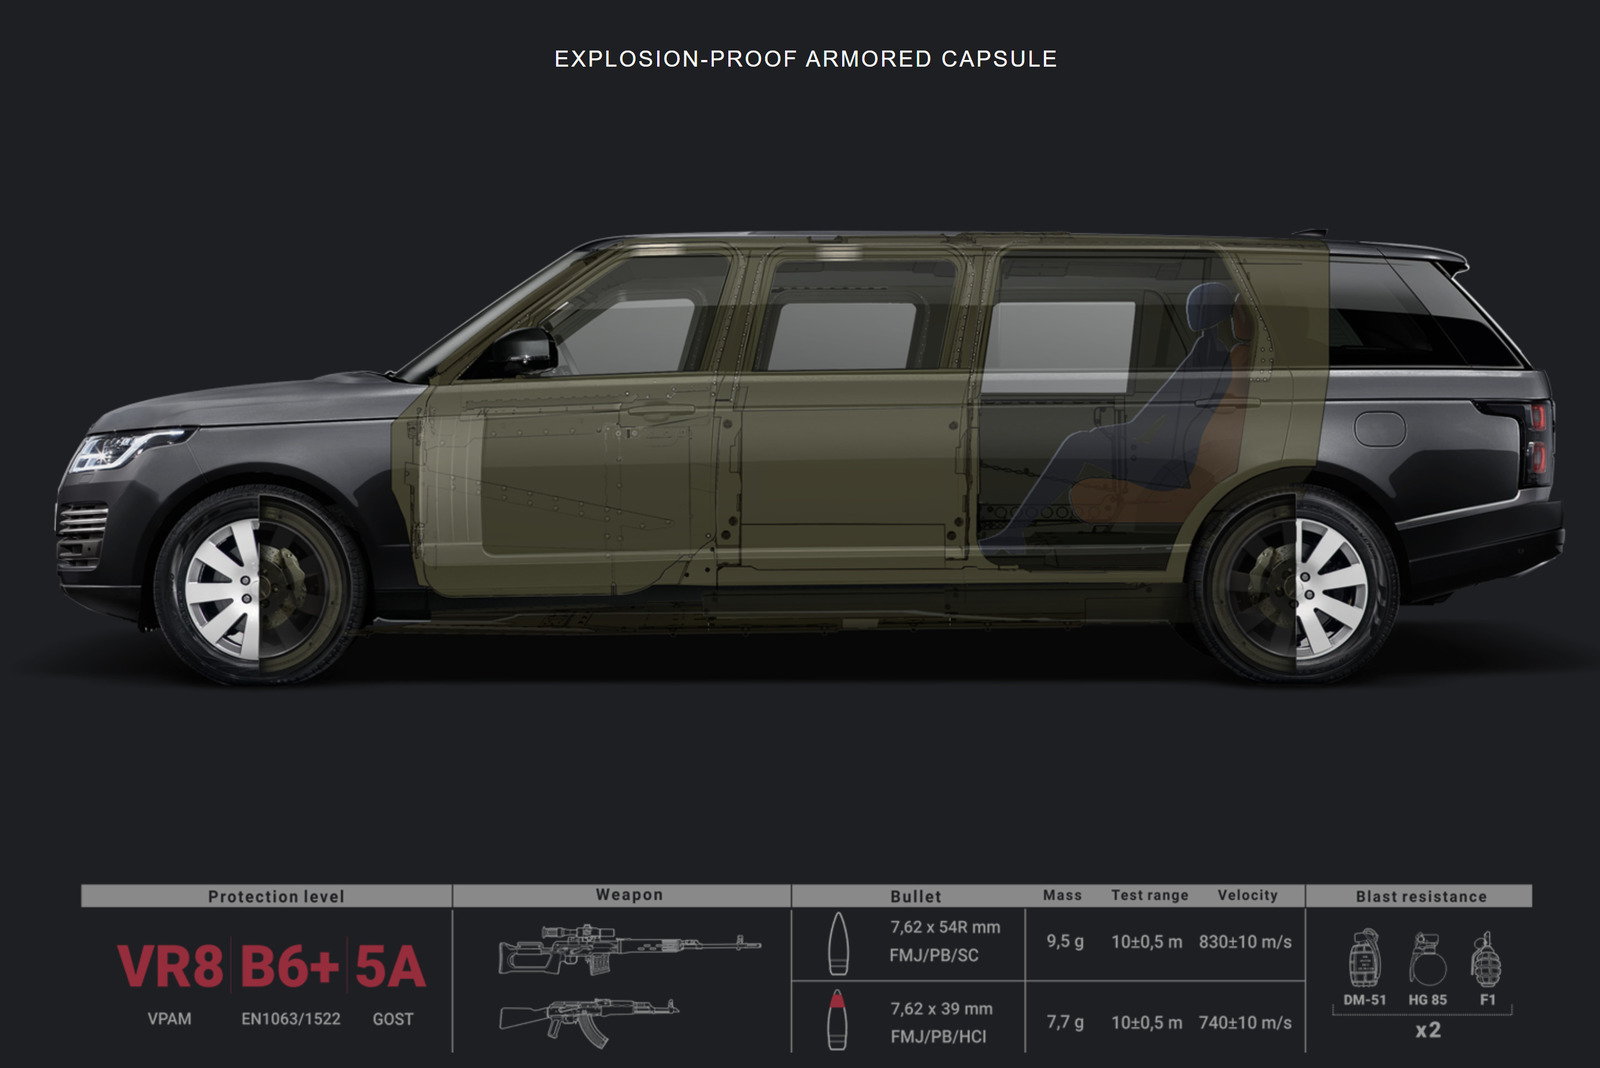 KLASSEN VIP - Manufacturer - Land Rover - Model - Range Rover